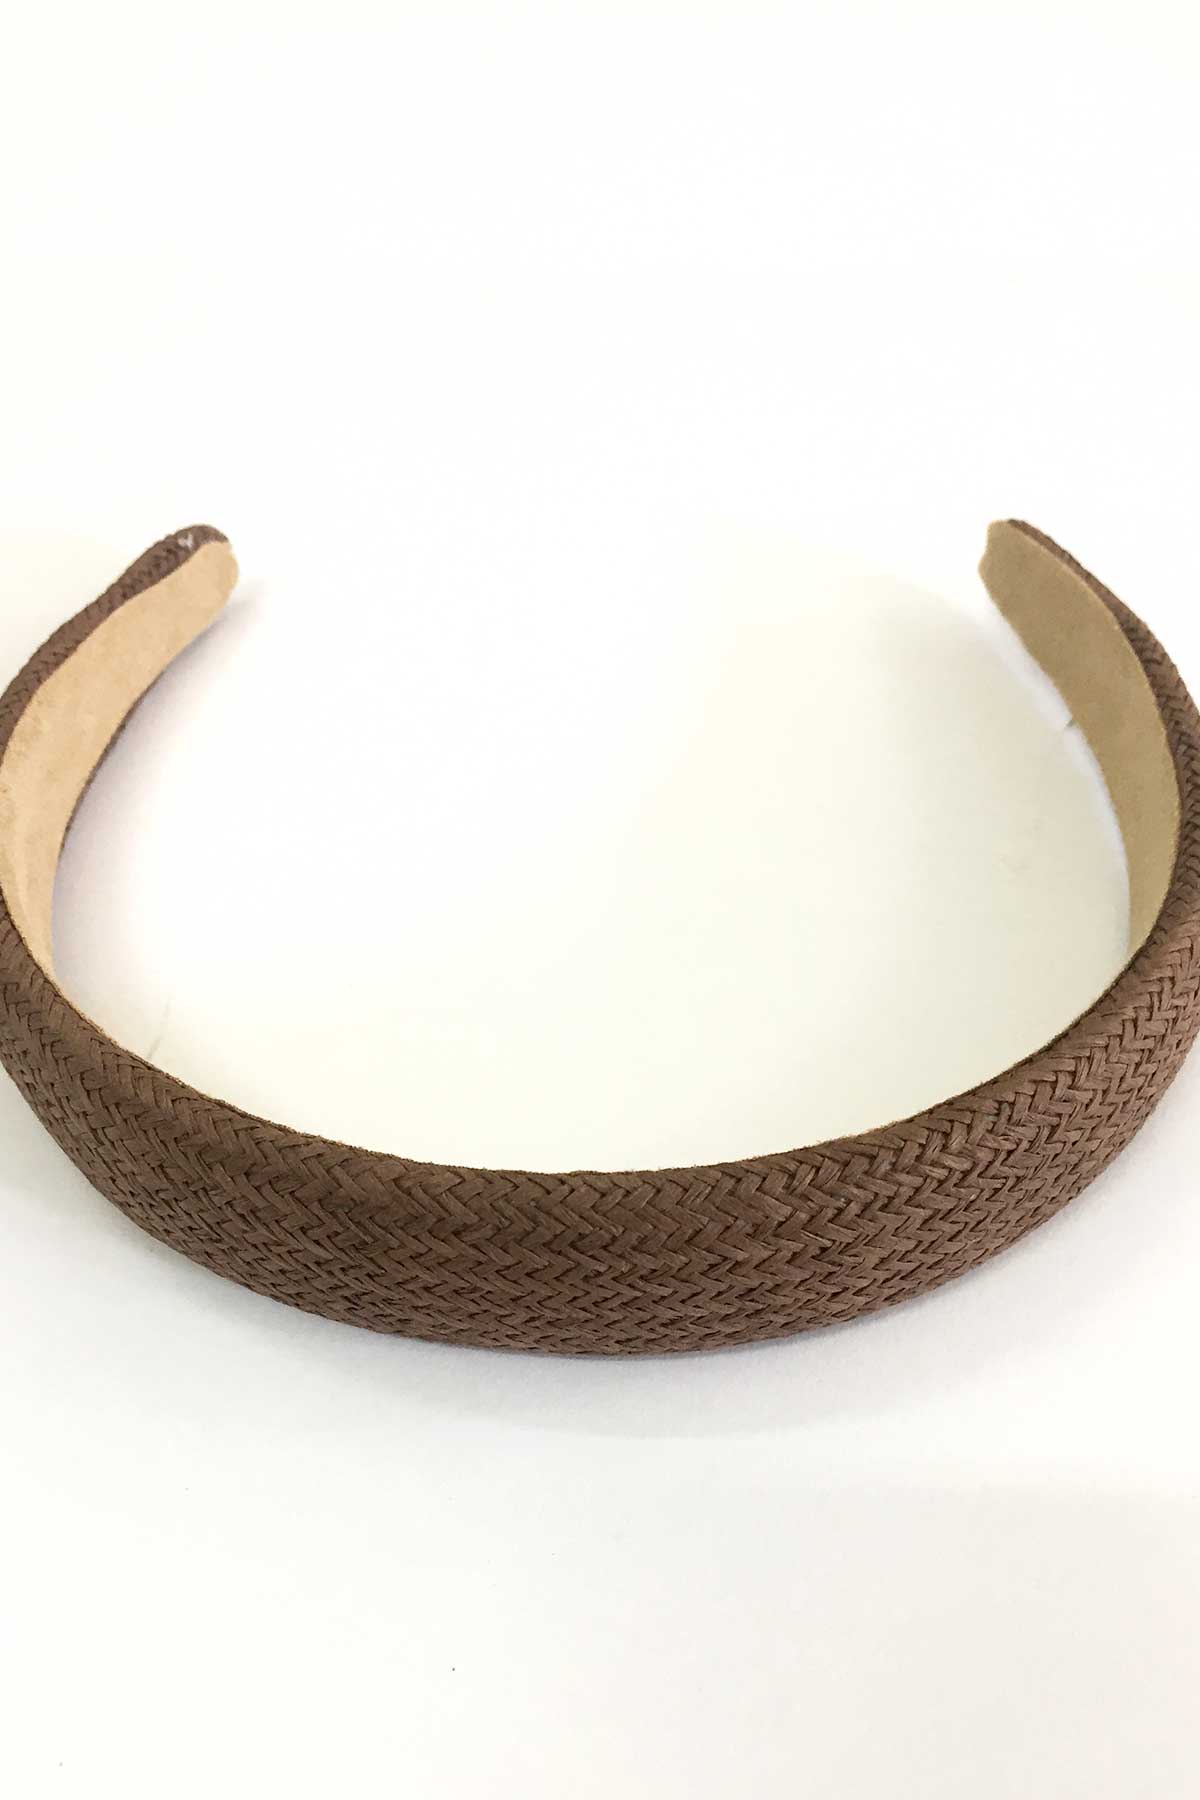 brown headband